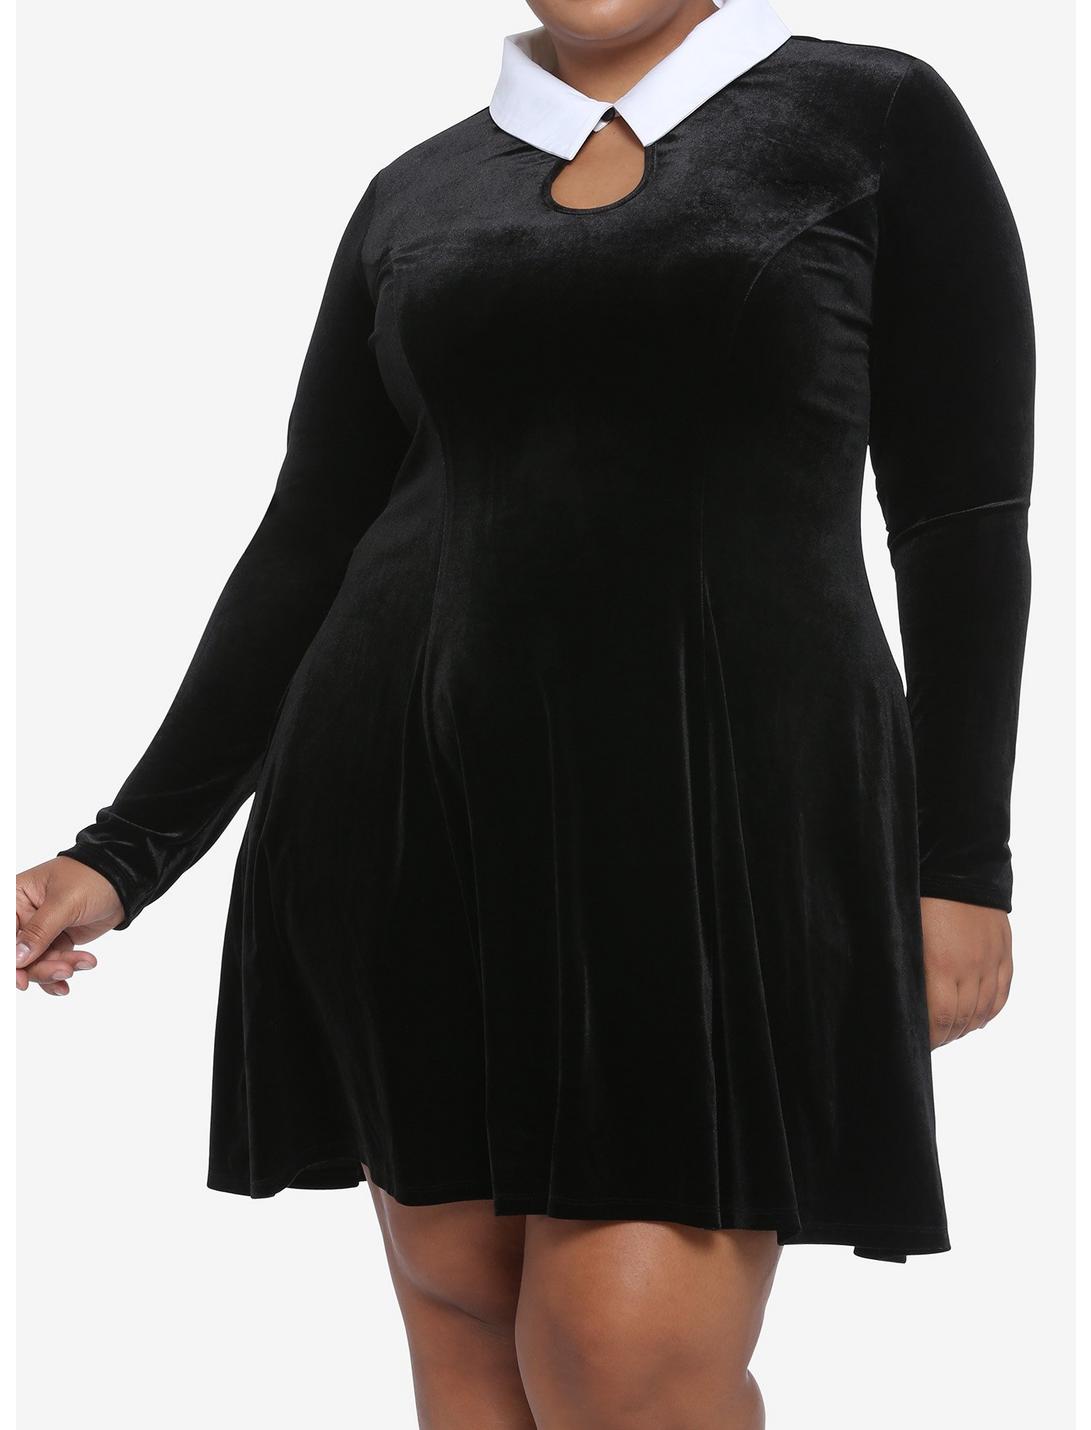 Black Velvet Keyhole Long-Sleeve Dress Plus Size, BLACK  WHITE, hi-res